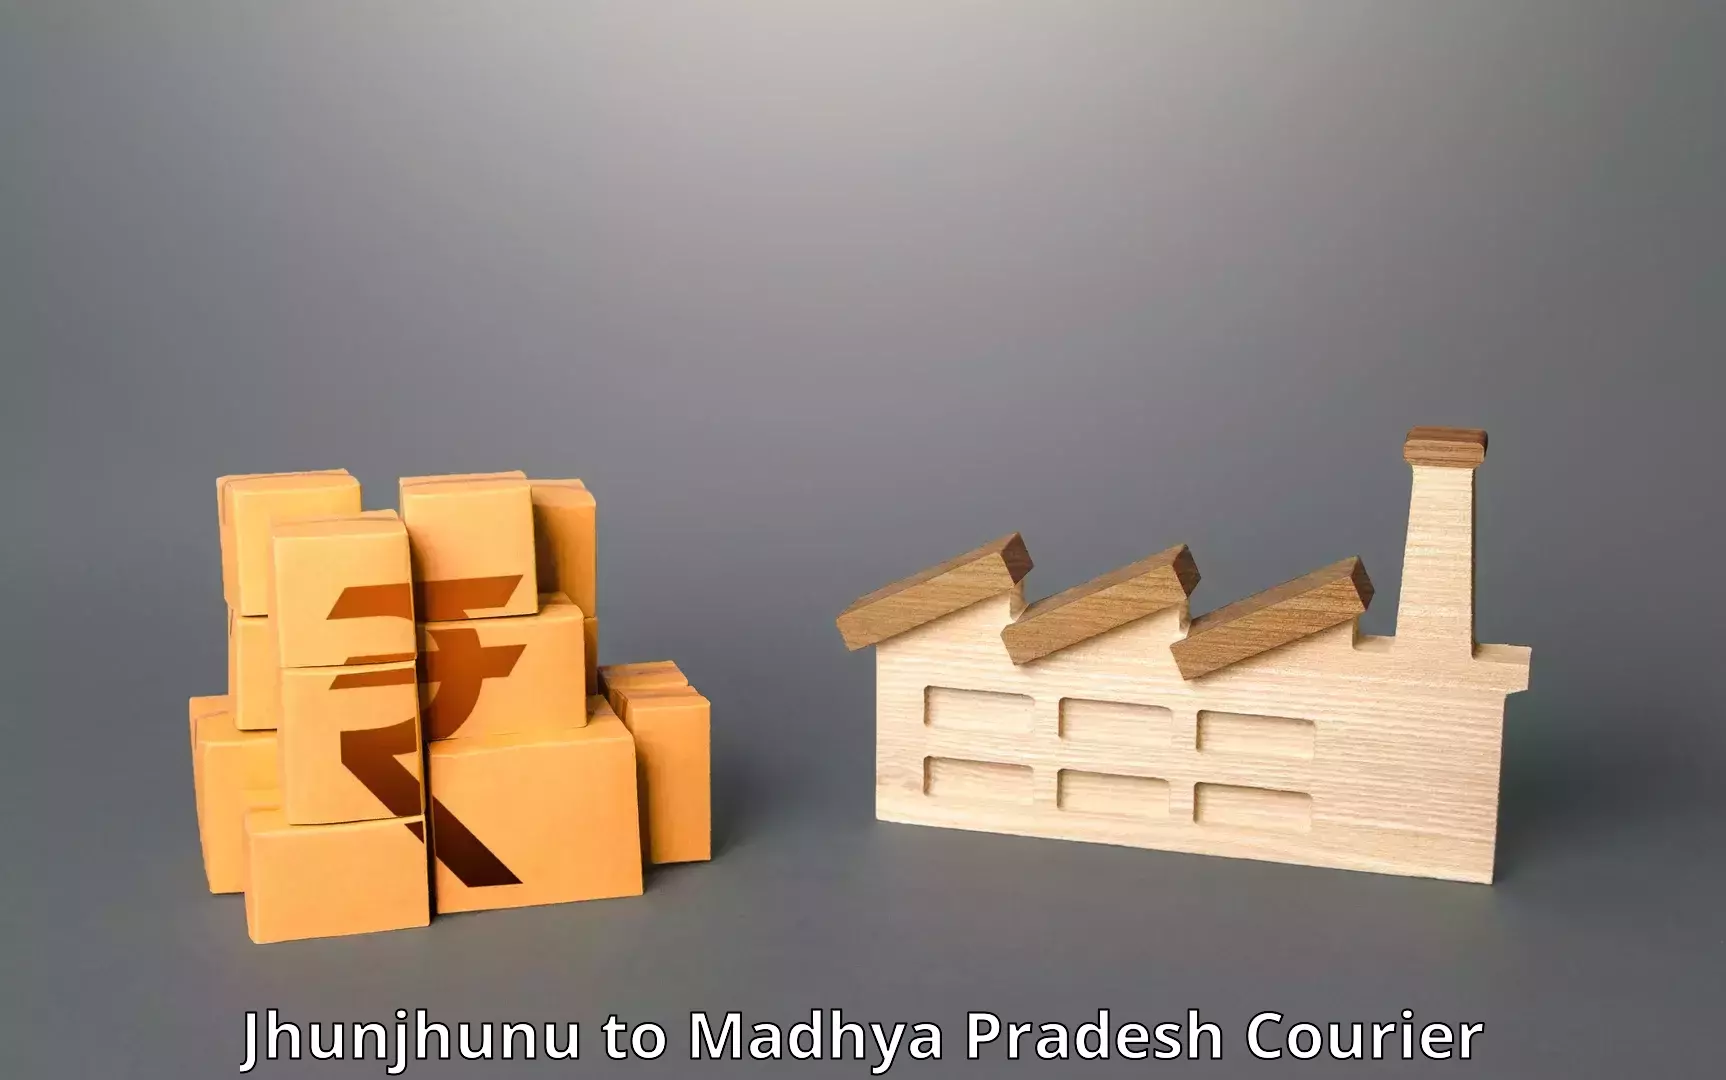 Professional courier handling Jhunjhunu to Begumganj